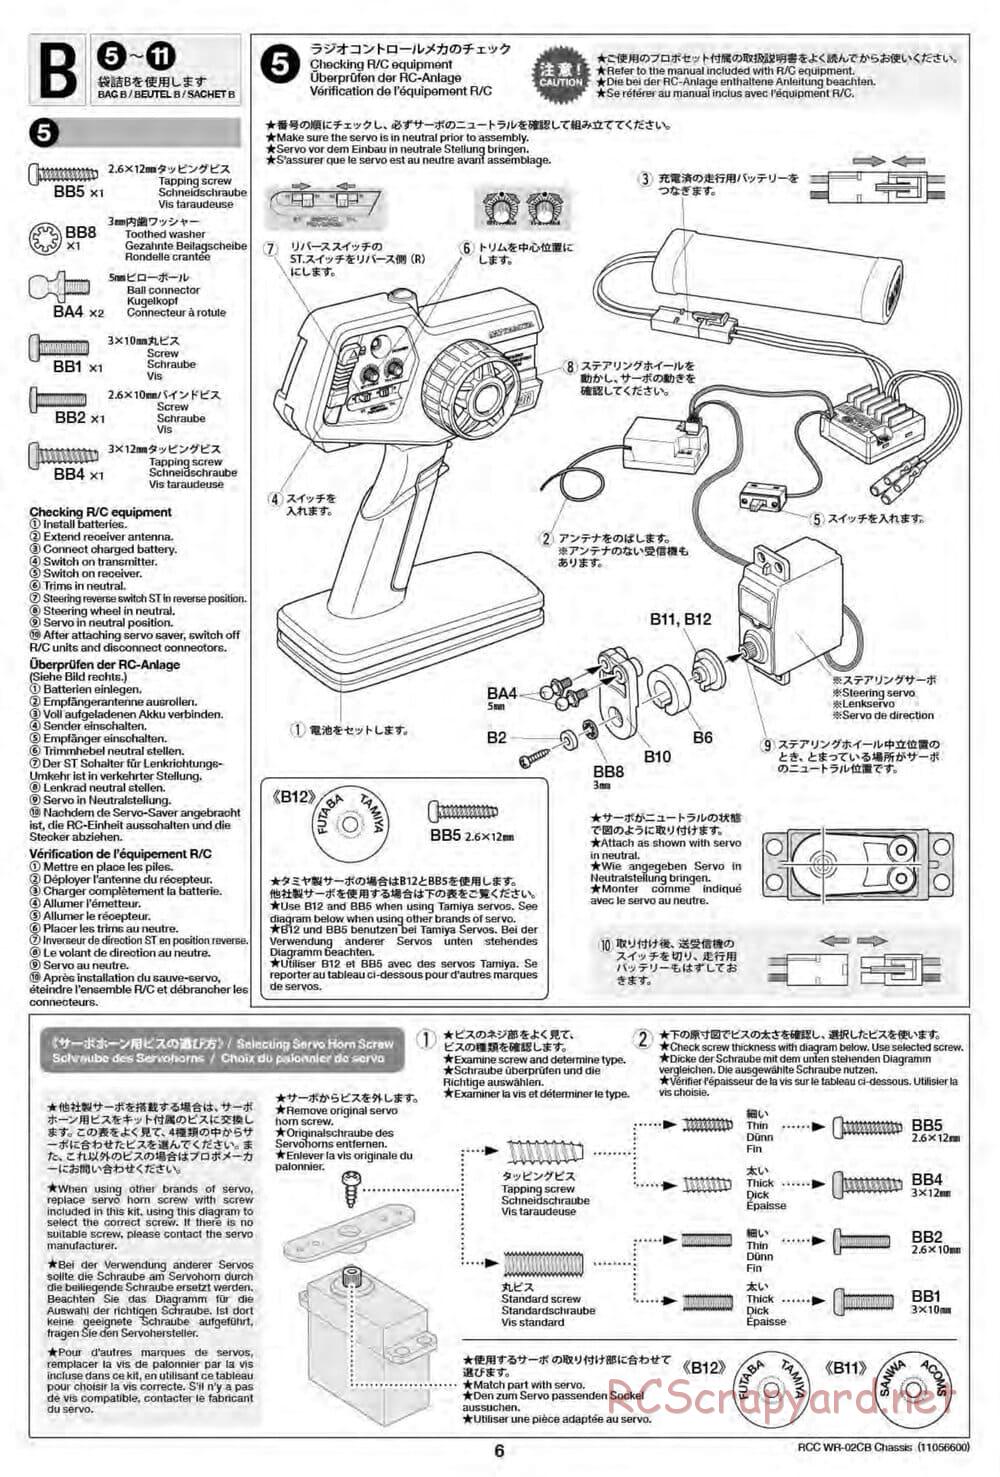 Tamiya - WR-02CB Chassis - Manual - Page 6